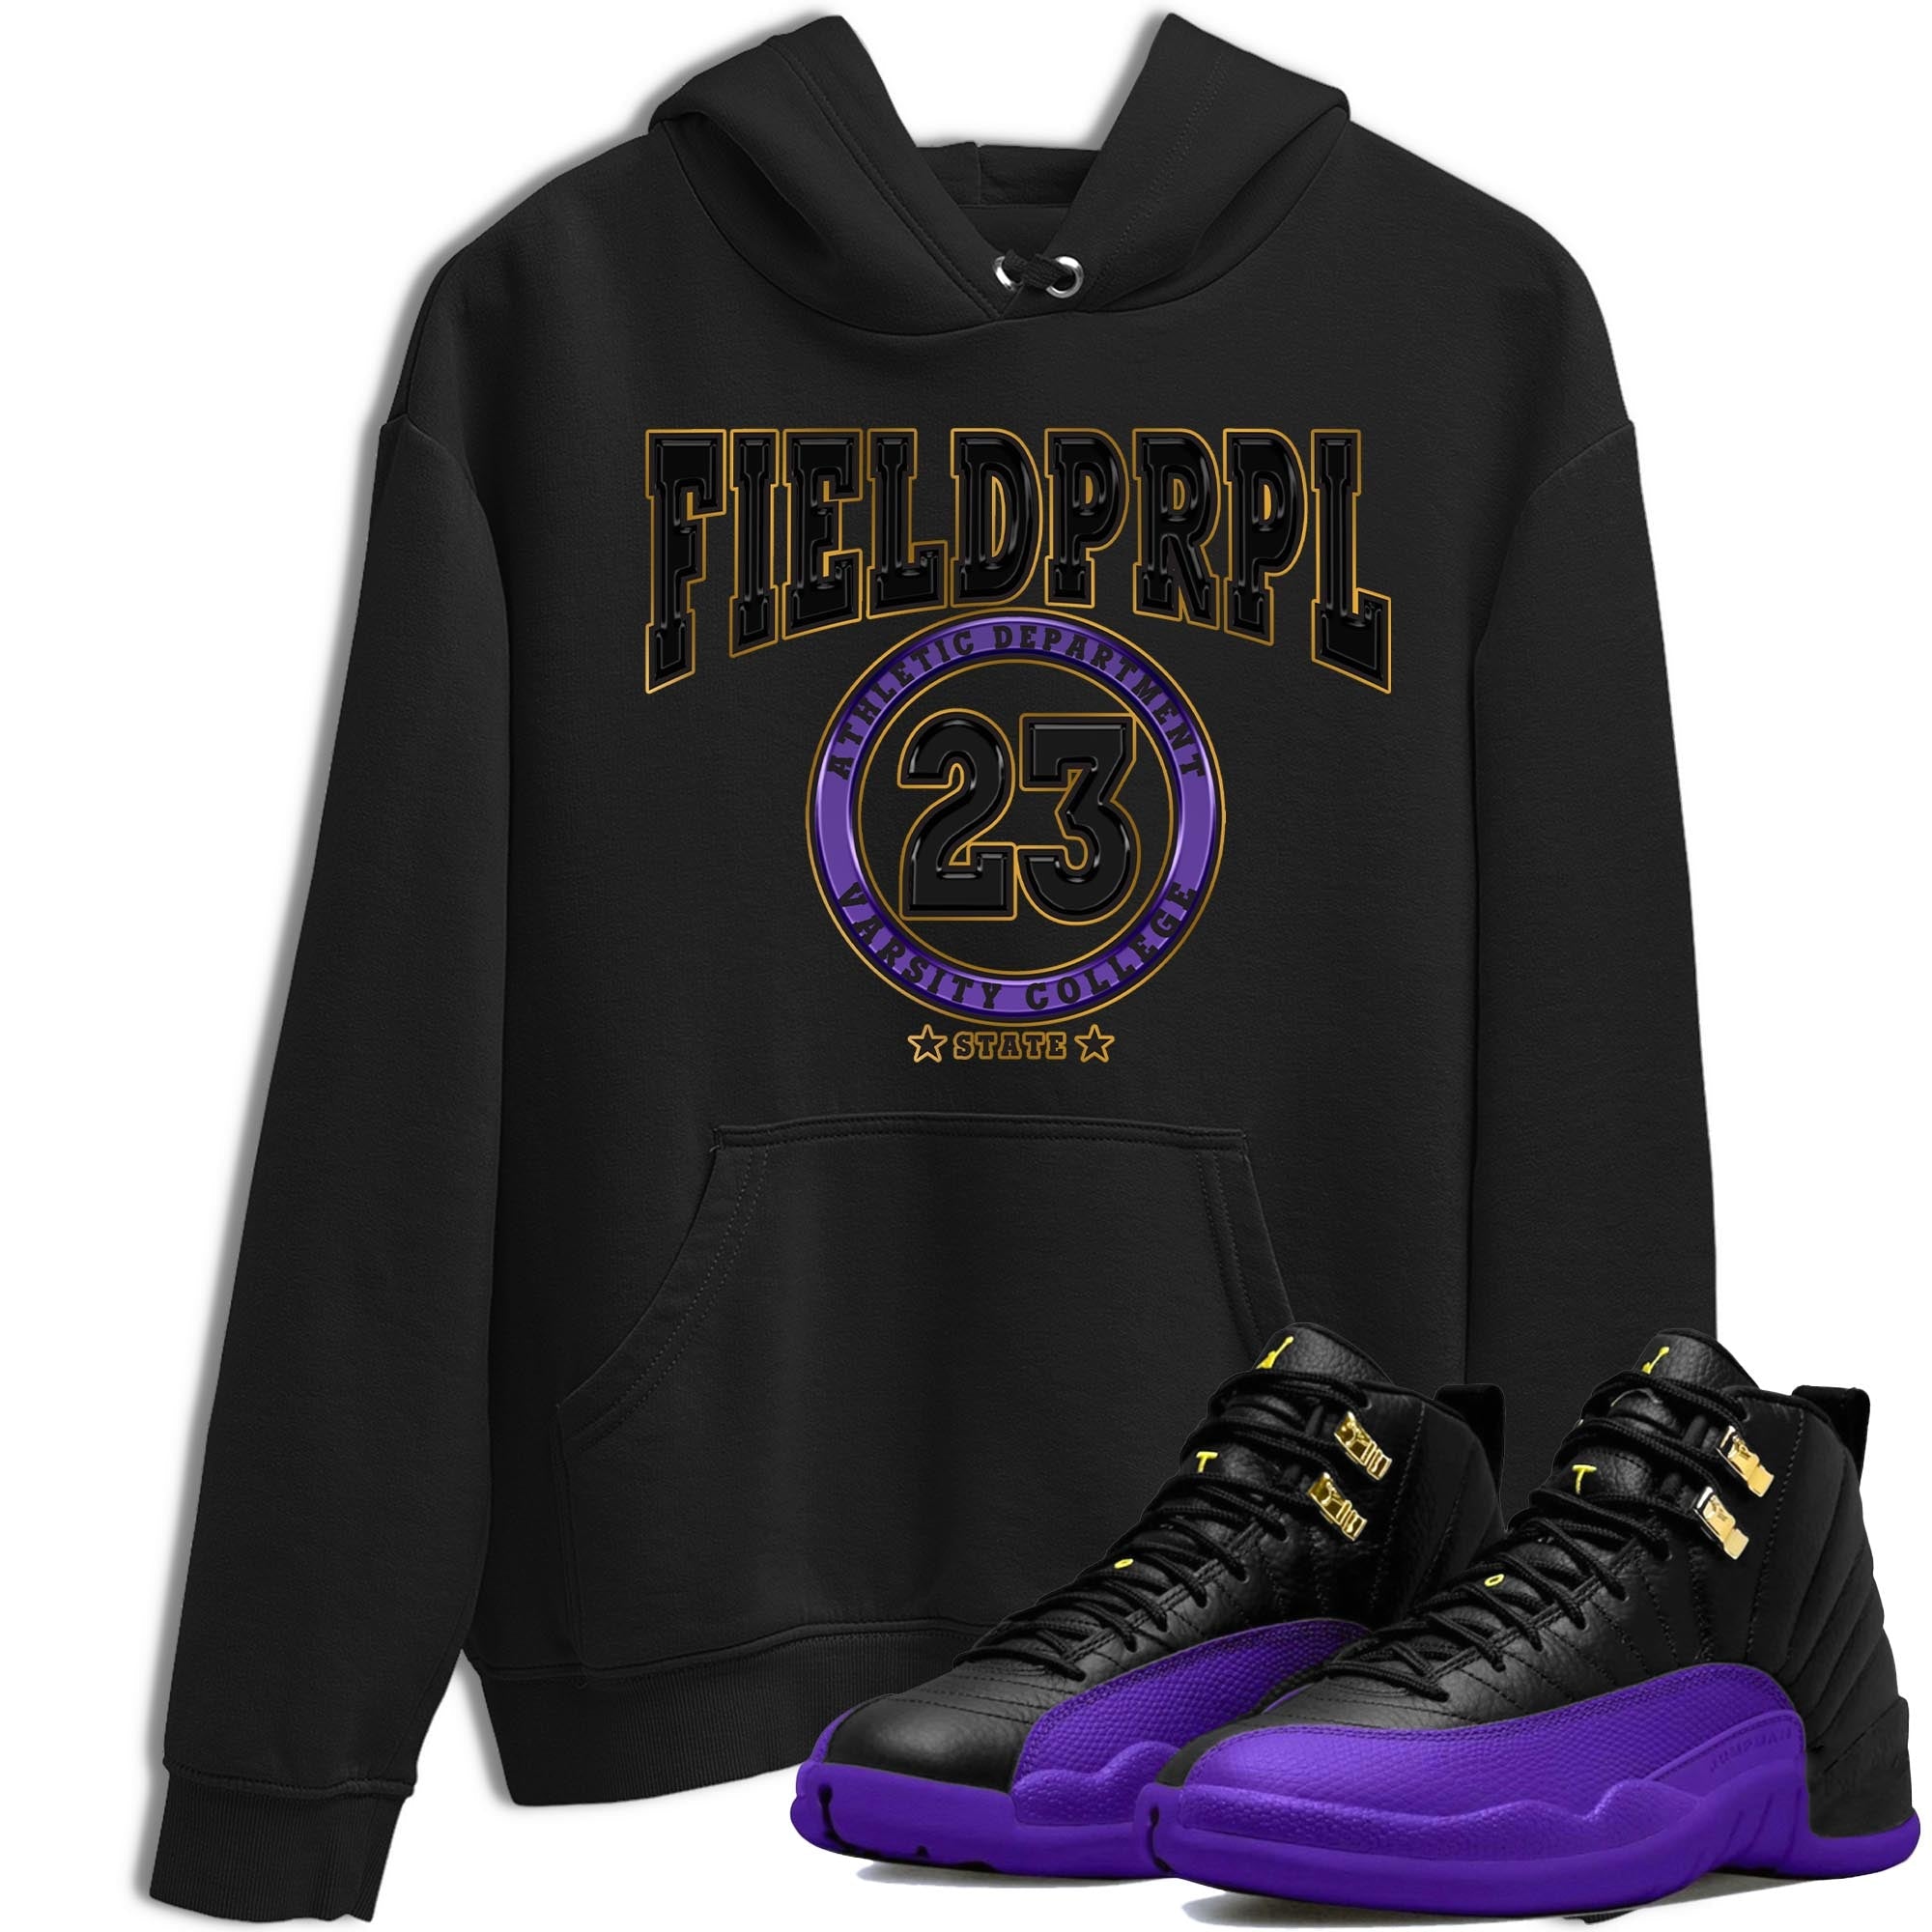 CarlyleWood Custom Jordan 23 Shoes Baseball Jersey Shirt to Match Black Field Purple 12S Tee, Jordan 12 Field Purple Matching Baseball Jersey